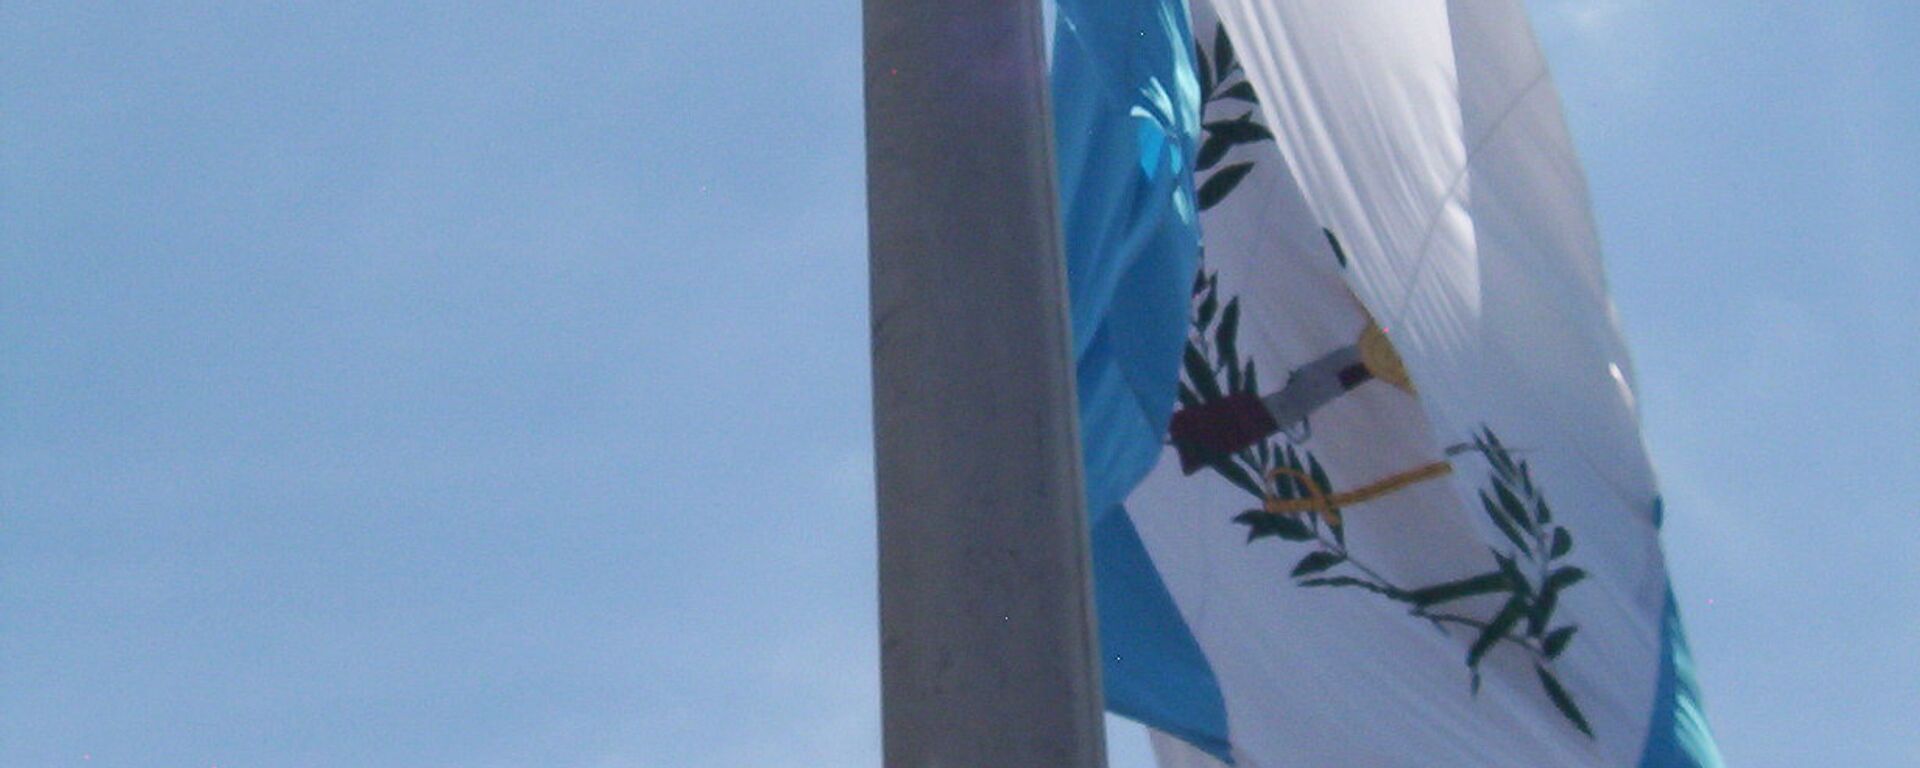 Bandera de Guatemala - Sputnik Mundo, 1920, 17.06.2021